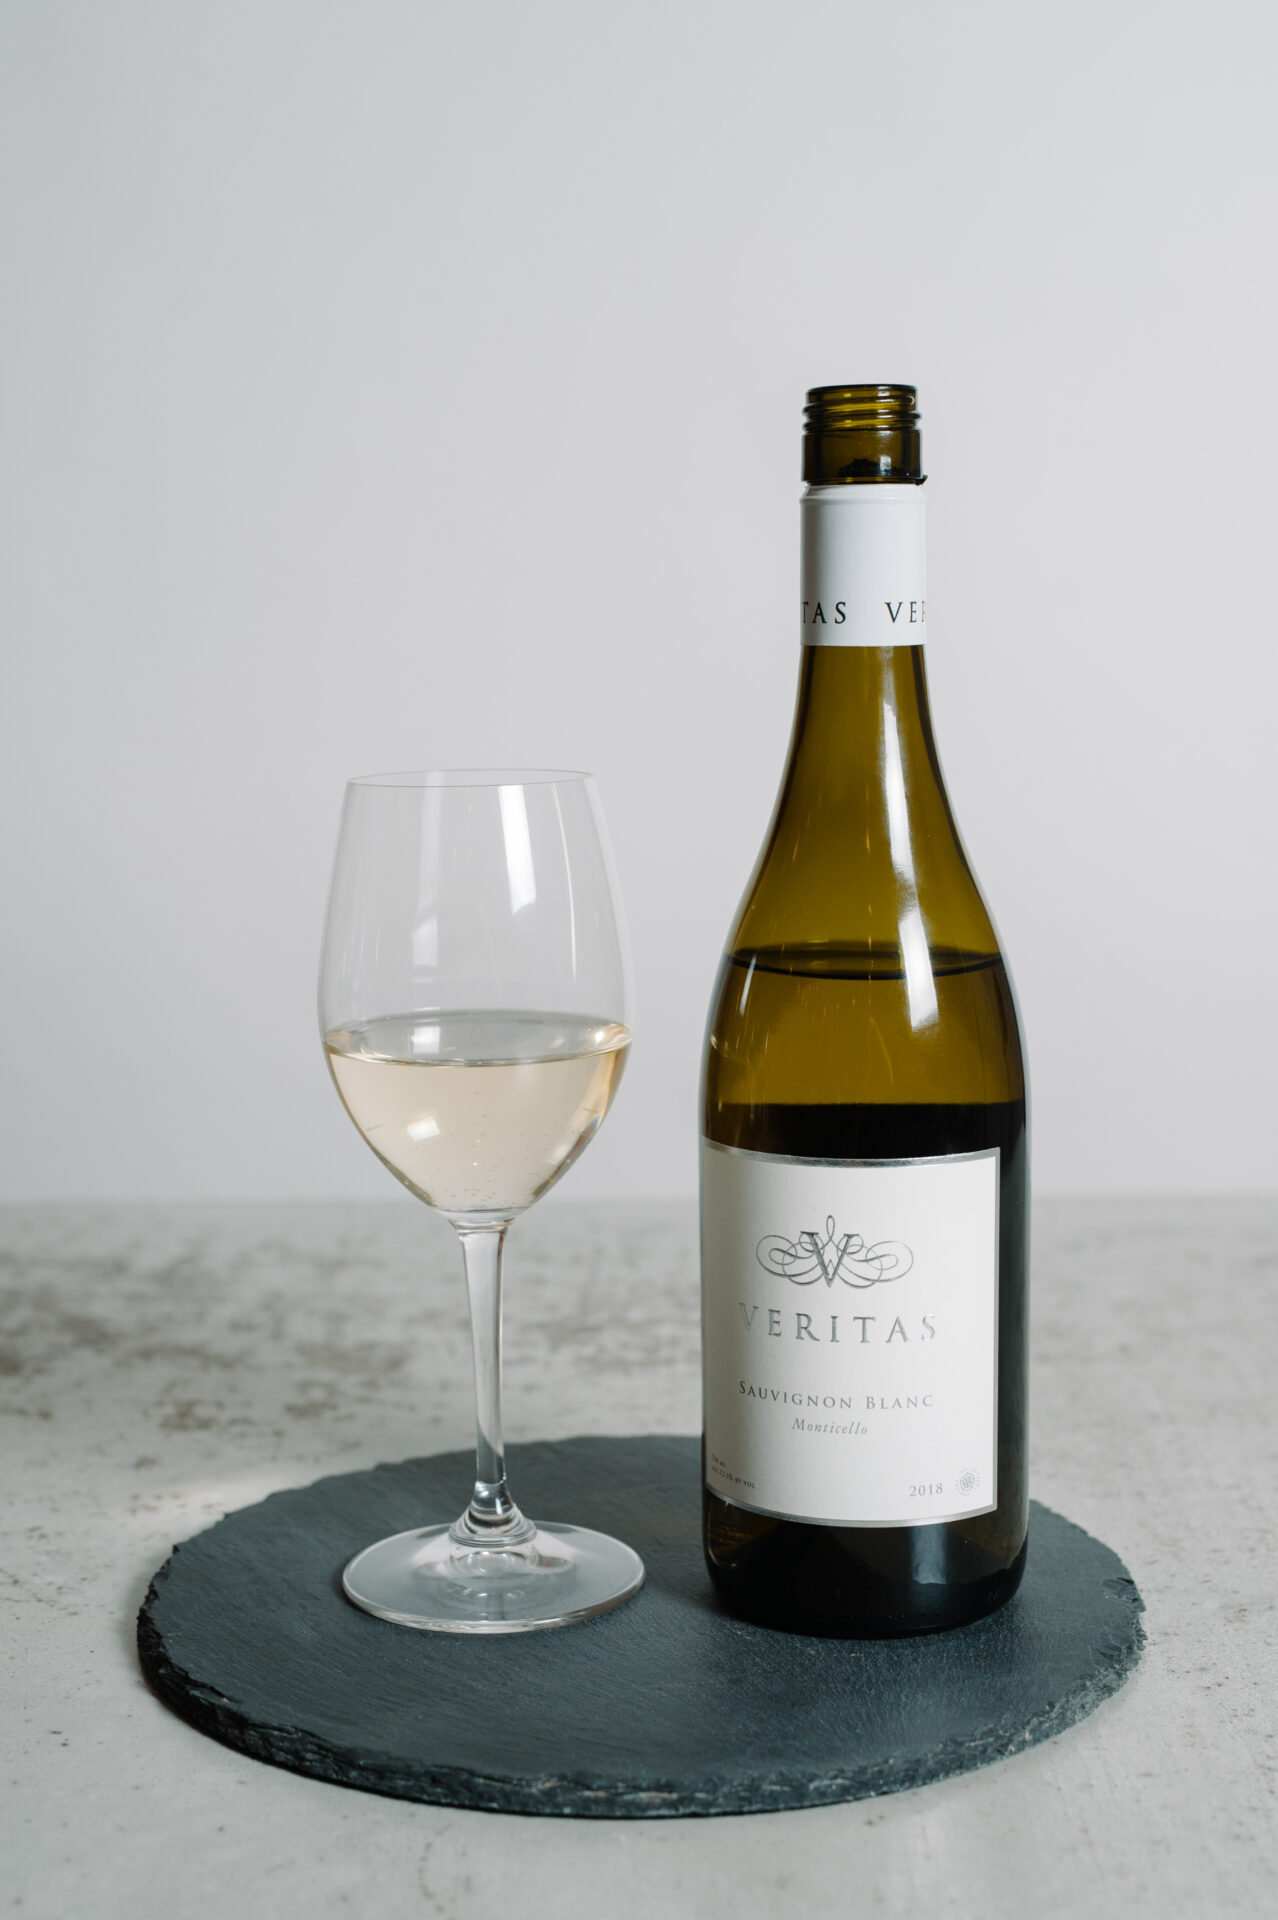  Veritas wine bottle and glass